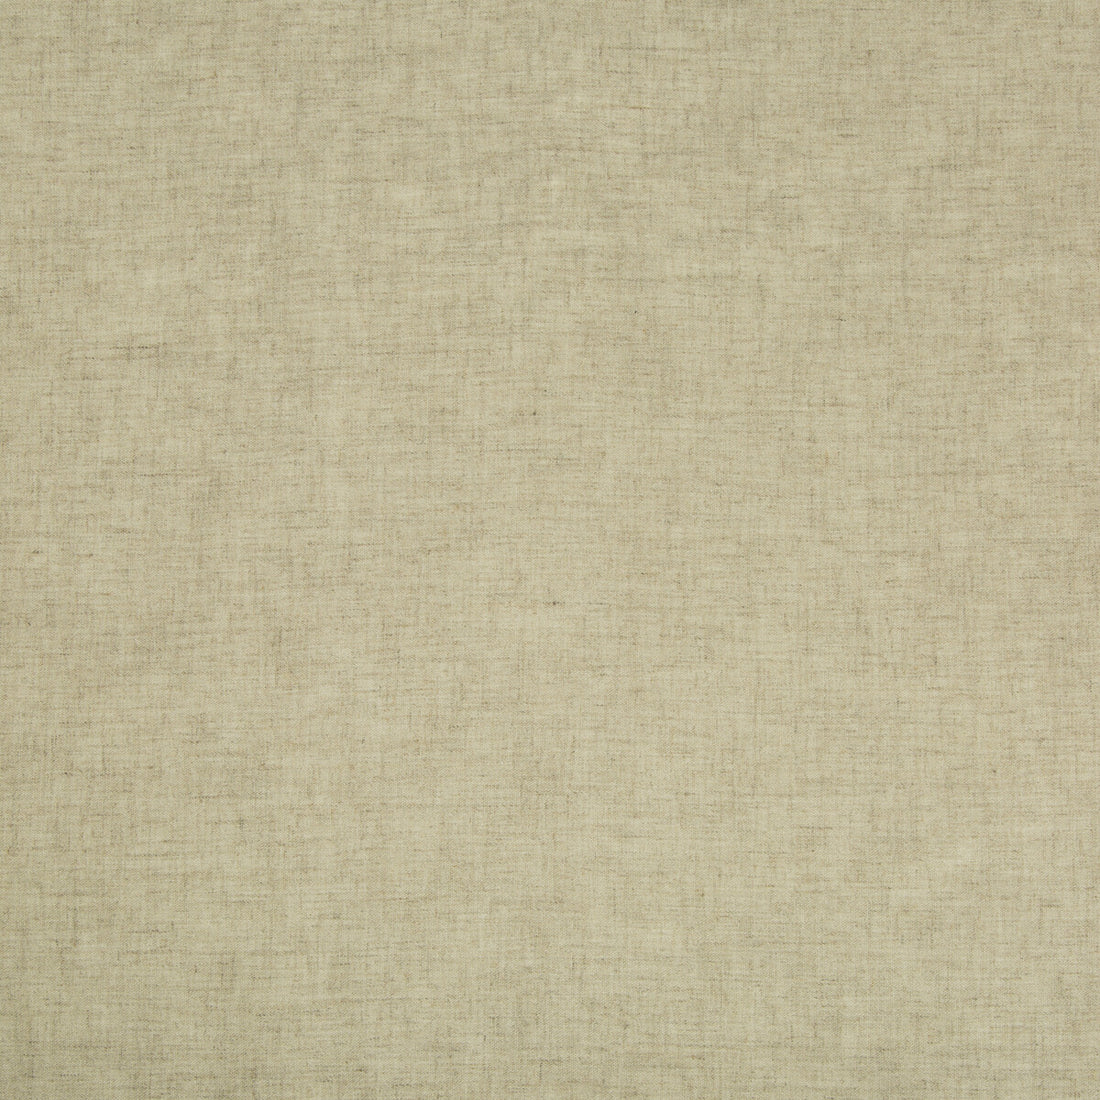 Kravet Basics fabric in 4270-16 color - pattern 4270.16.0 - by Kravet Basics in the Gis collection